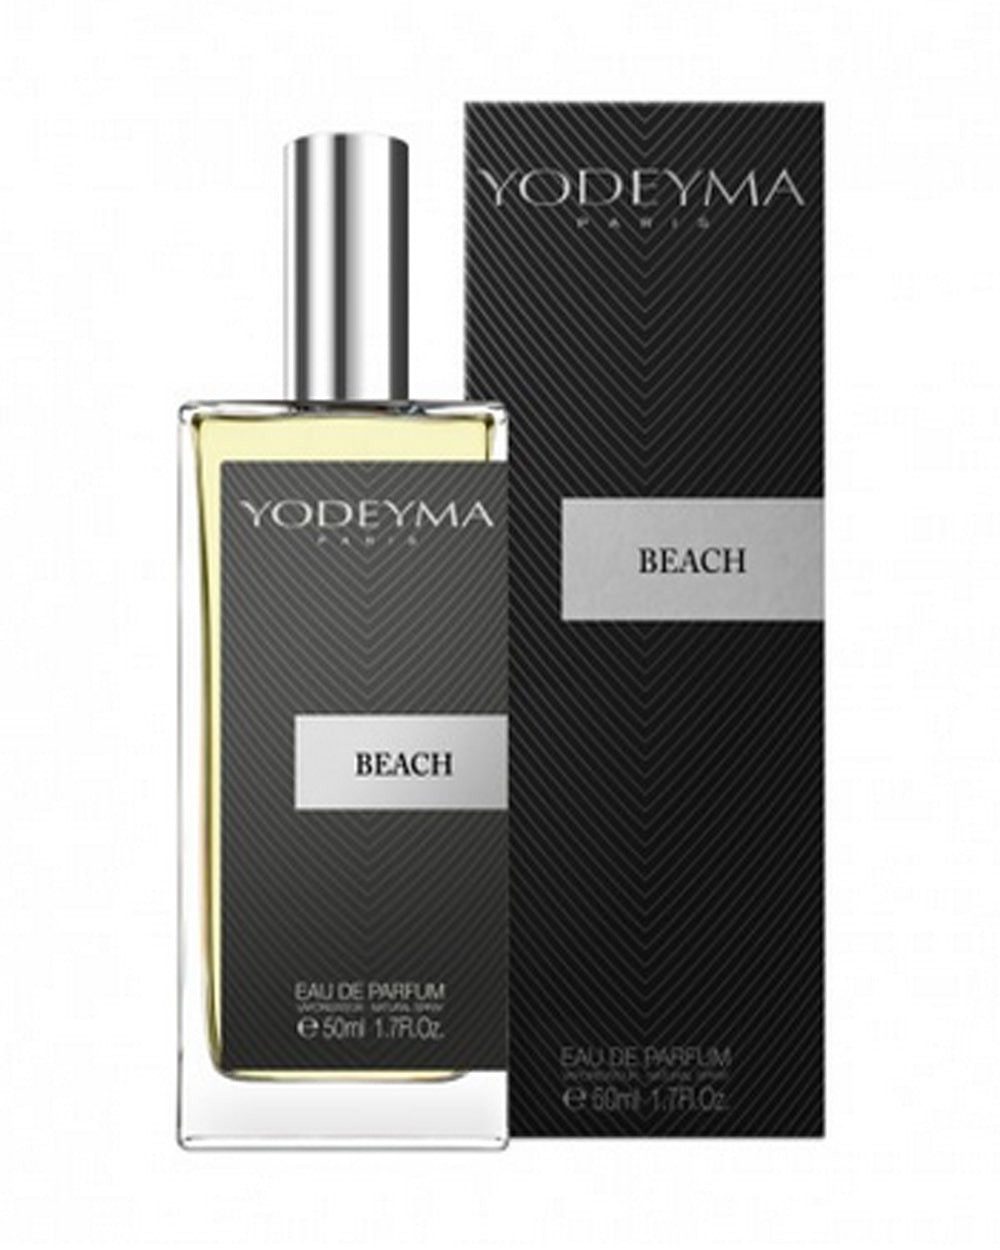 Eau de Parfum YODEYMA Parfum Beach - Eau de Parfum für Herren 50 ml